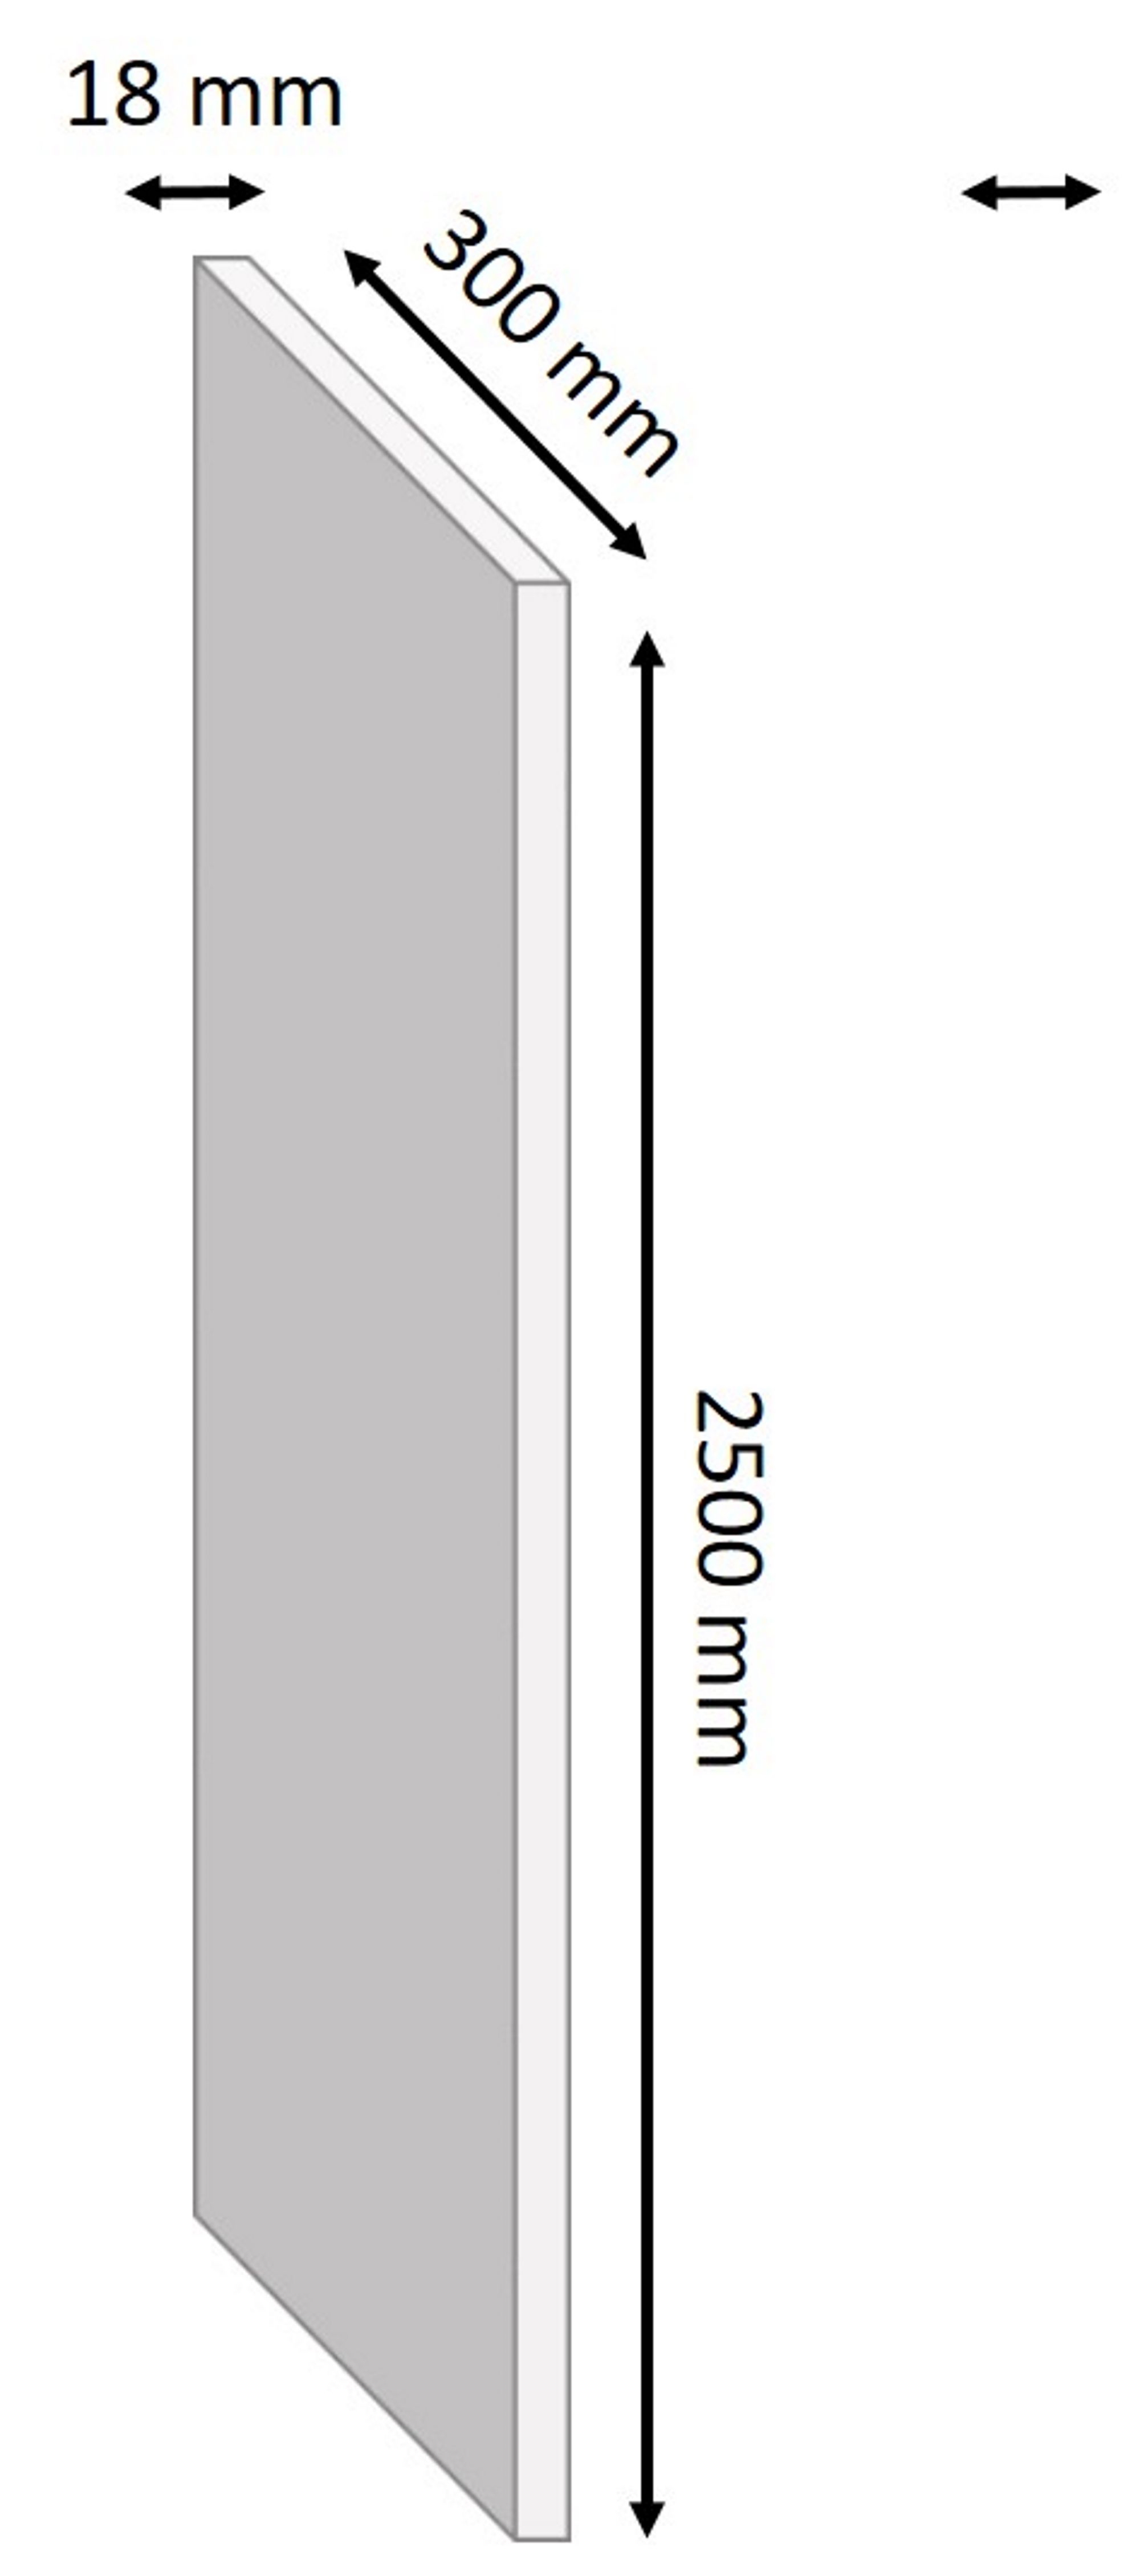 White Semi edged Melamine-faced chipboard (MFC) Furniture board, (L)2.5m (W)300mm (T)18mm